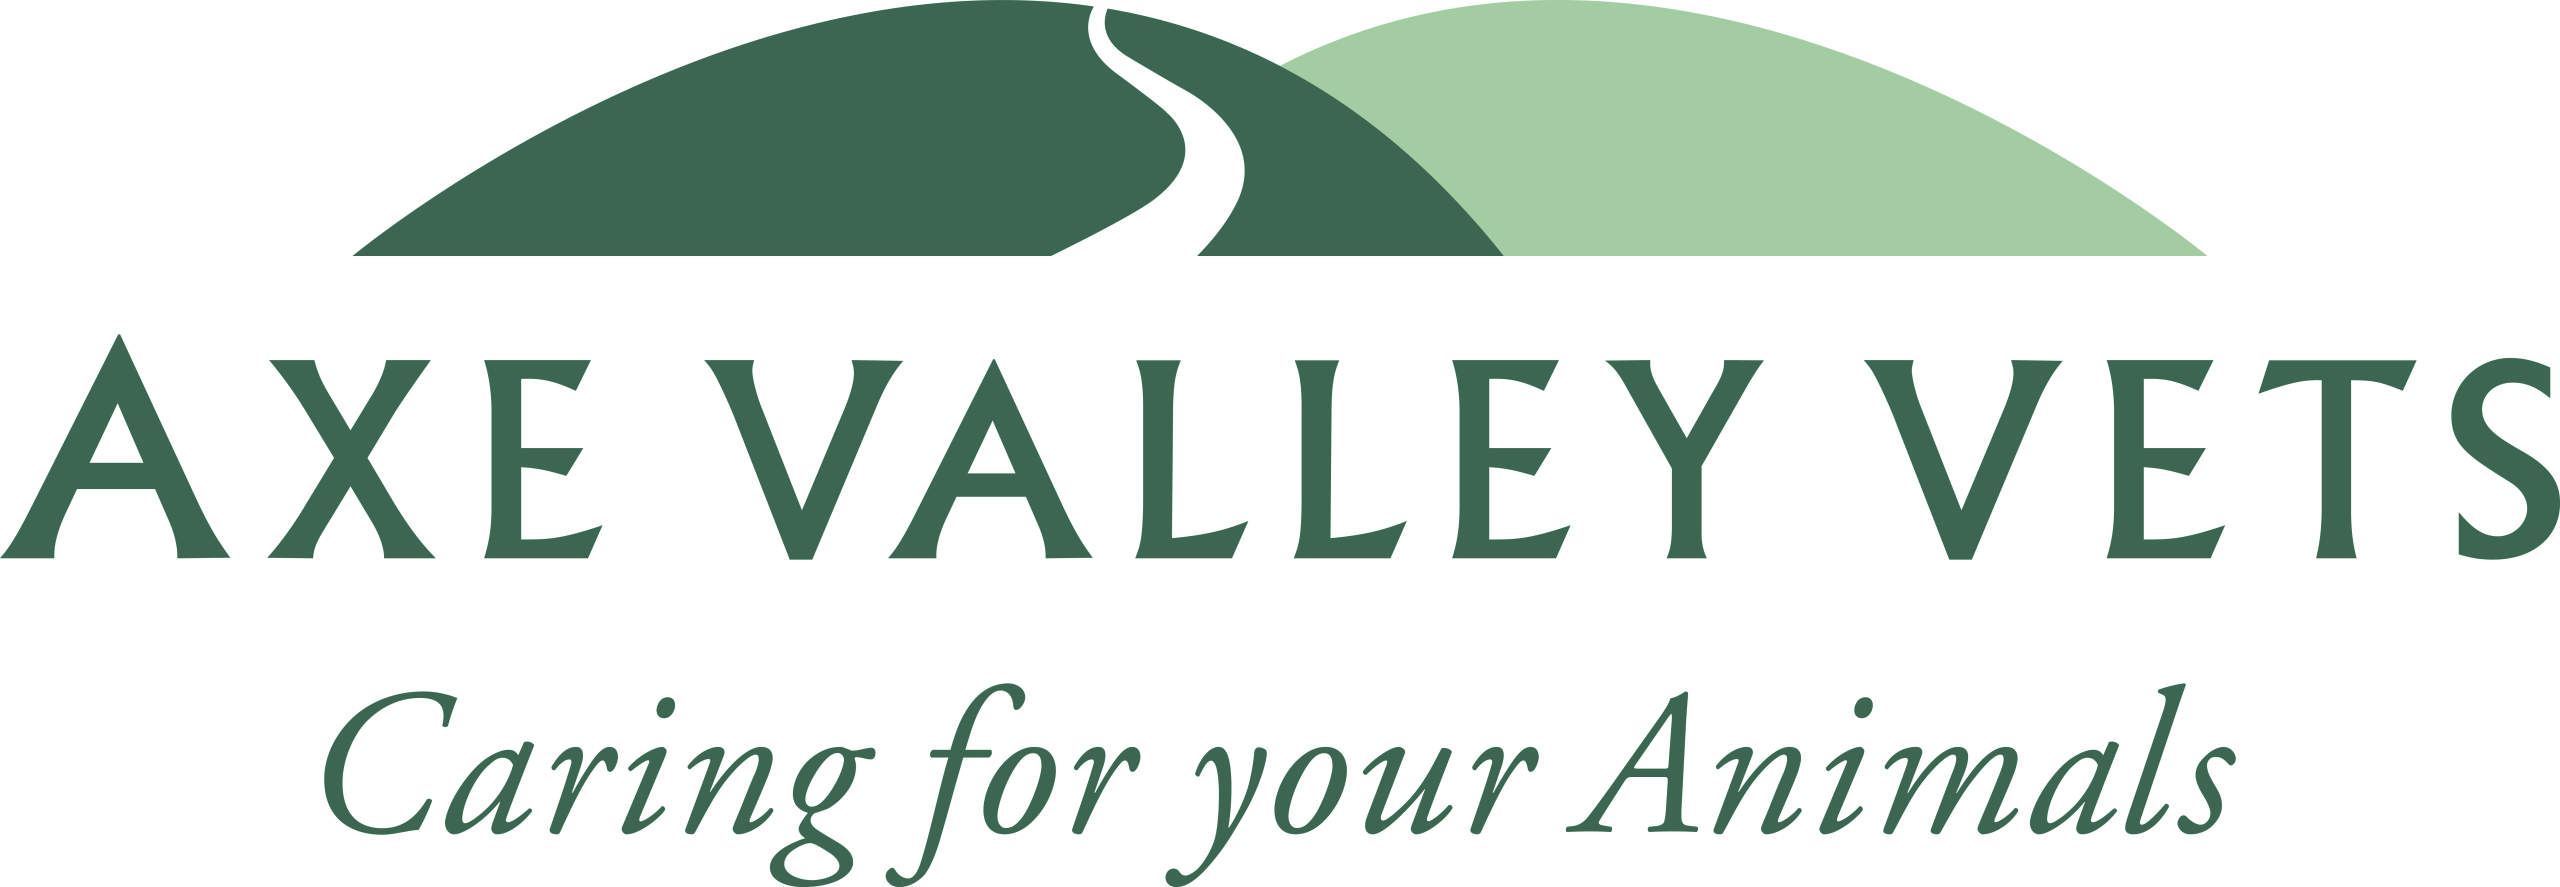 Contact Axe Valley Vets